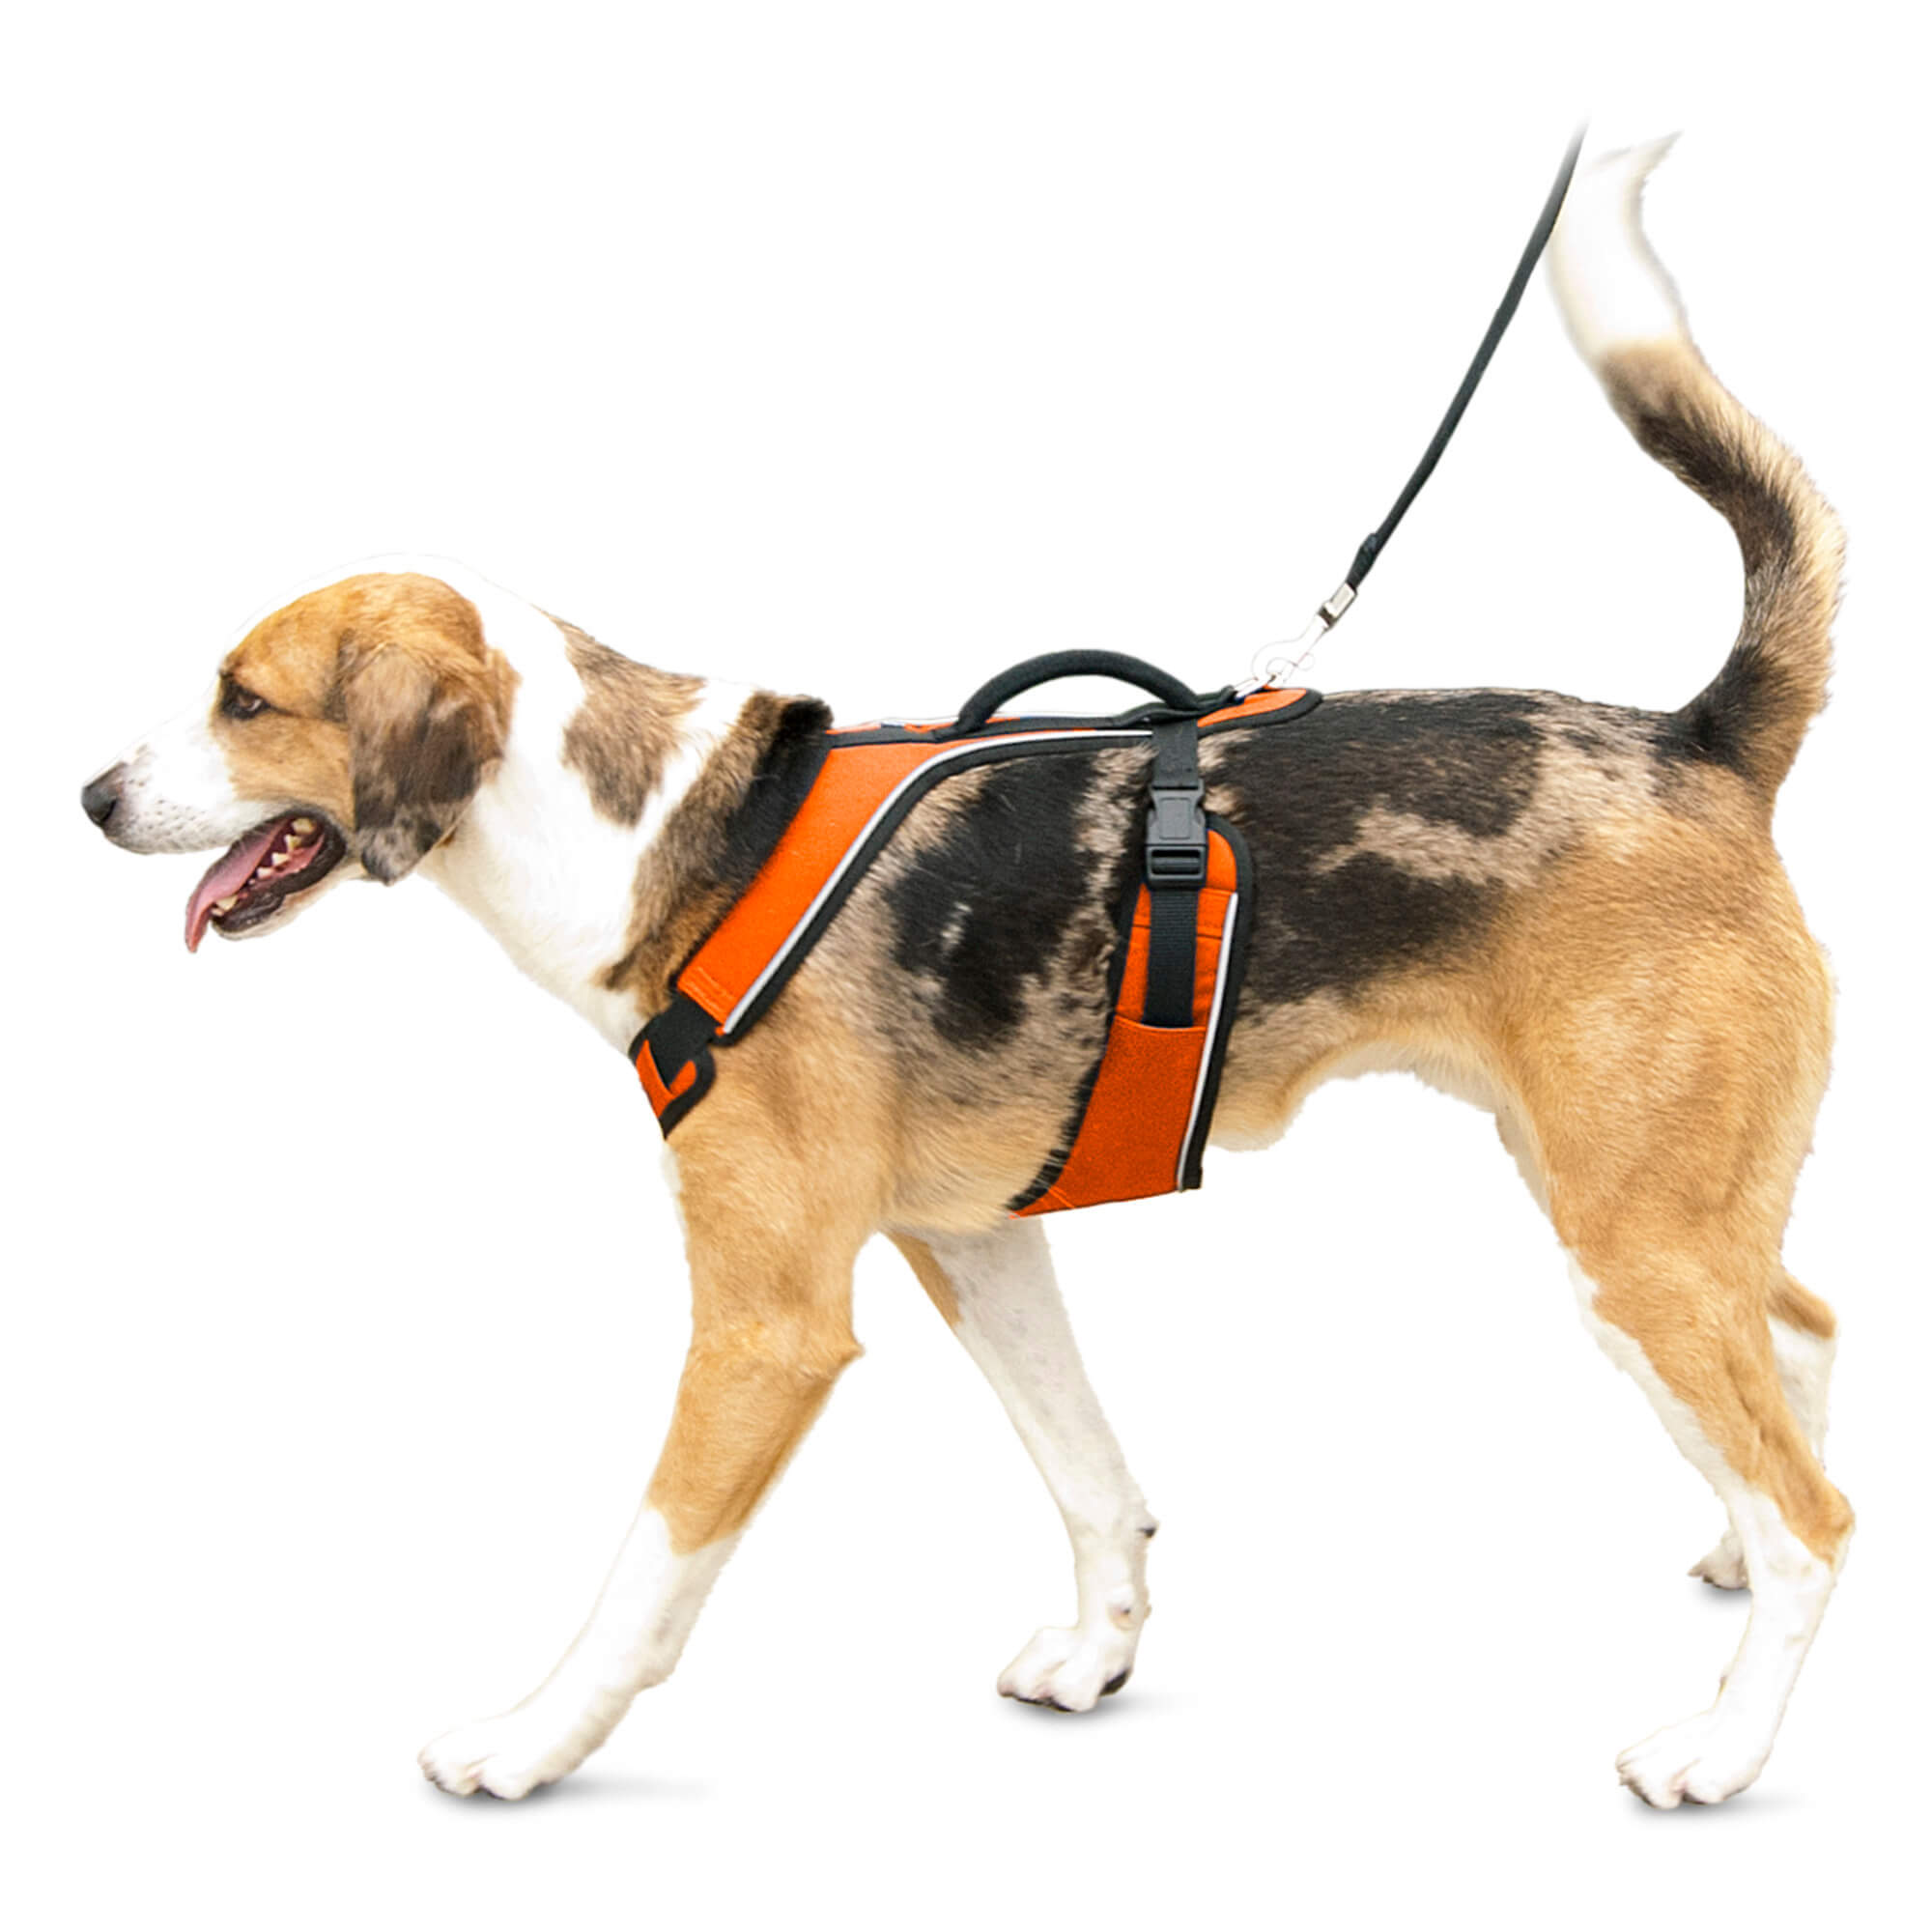 Dog wearing orange petsafe easysport harness in large